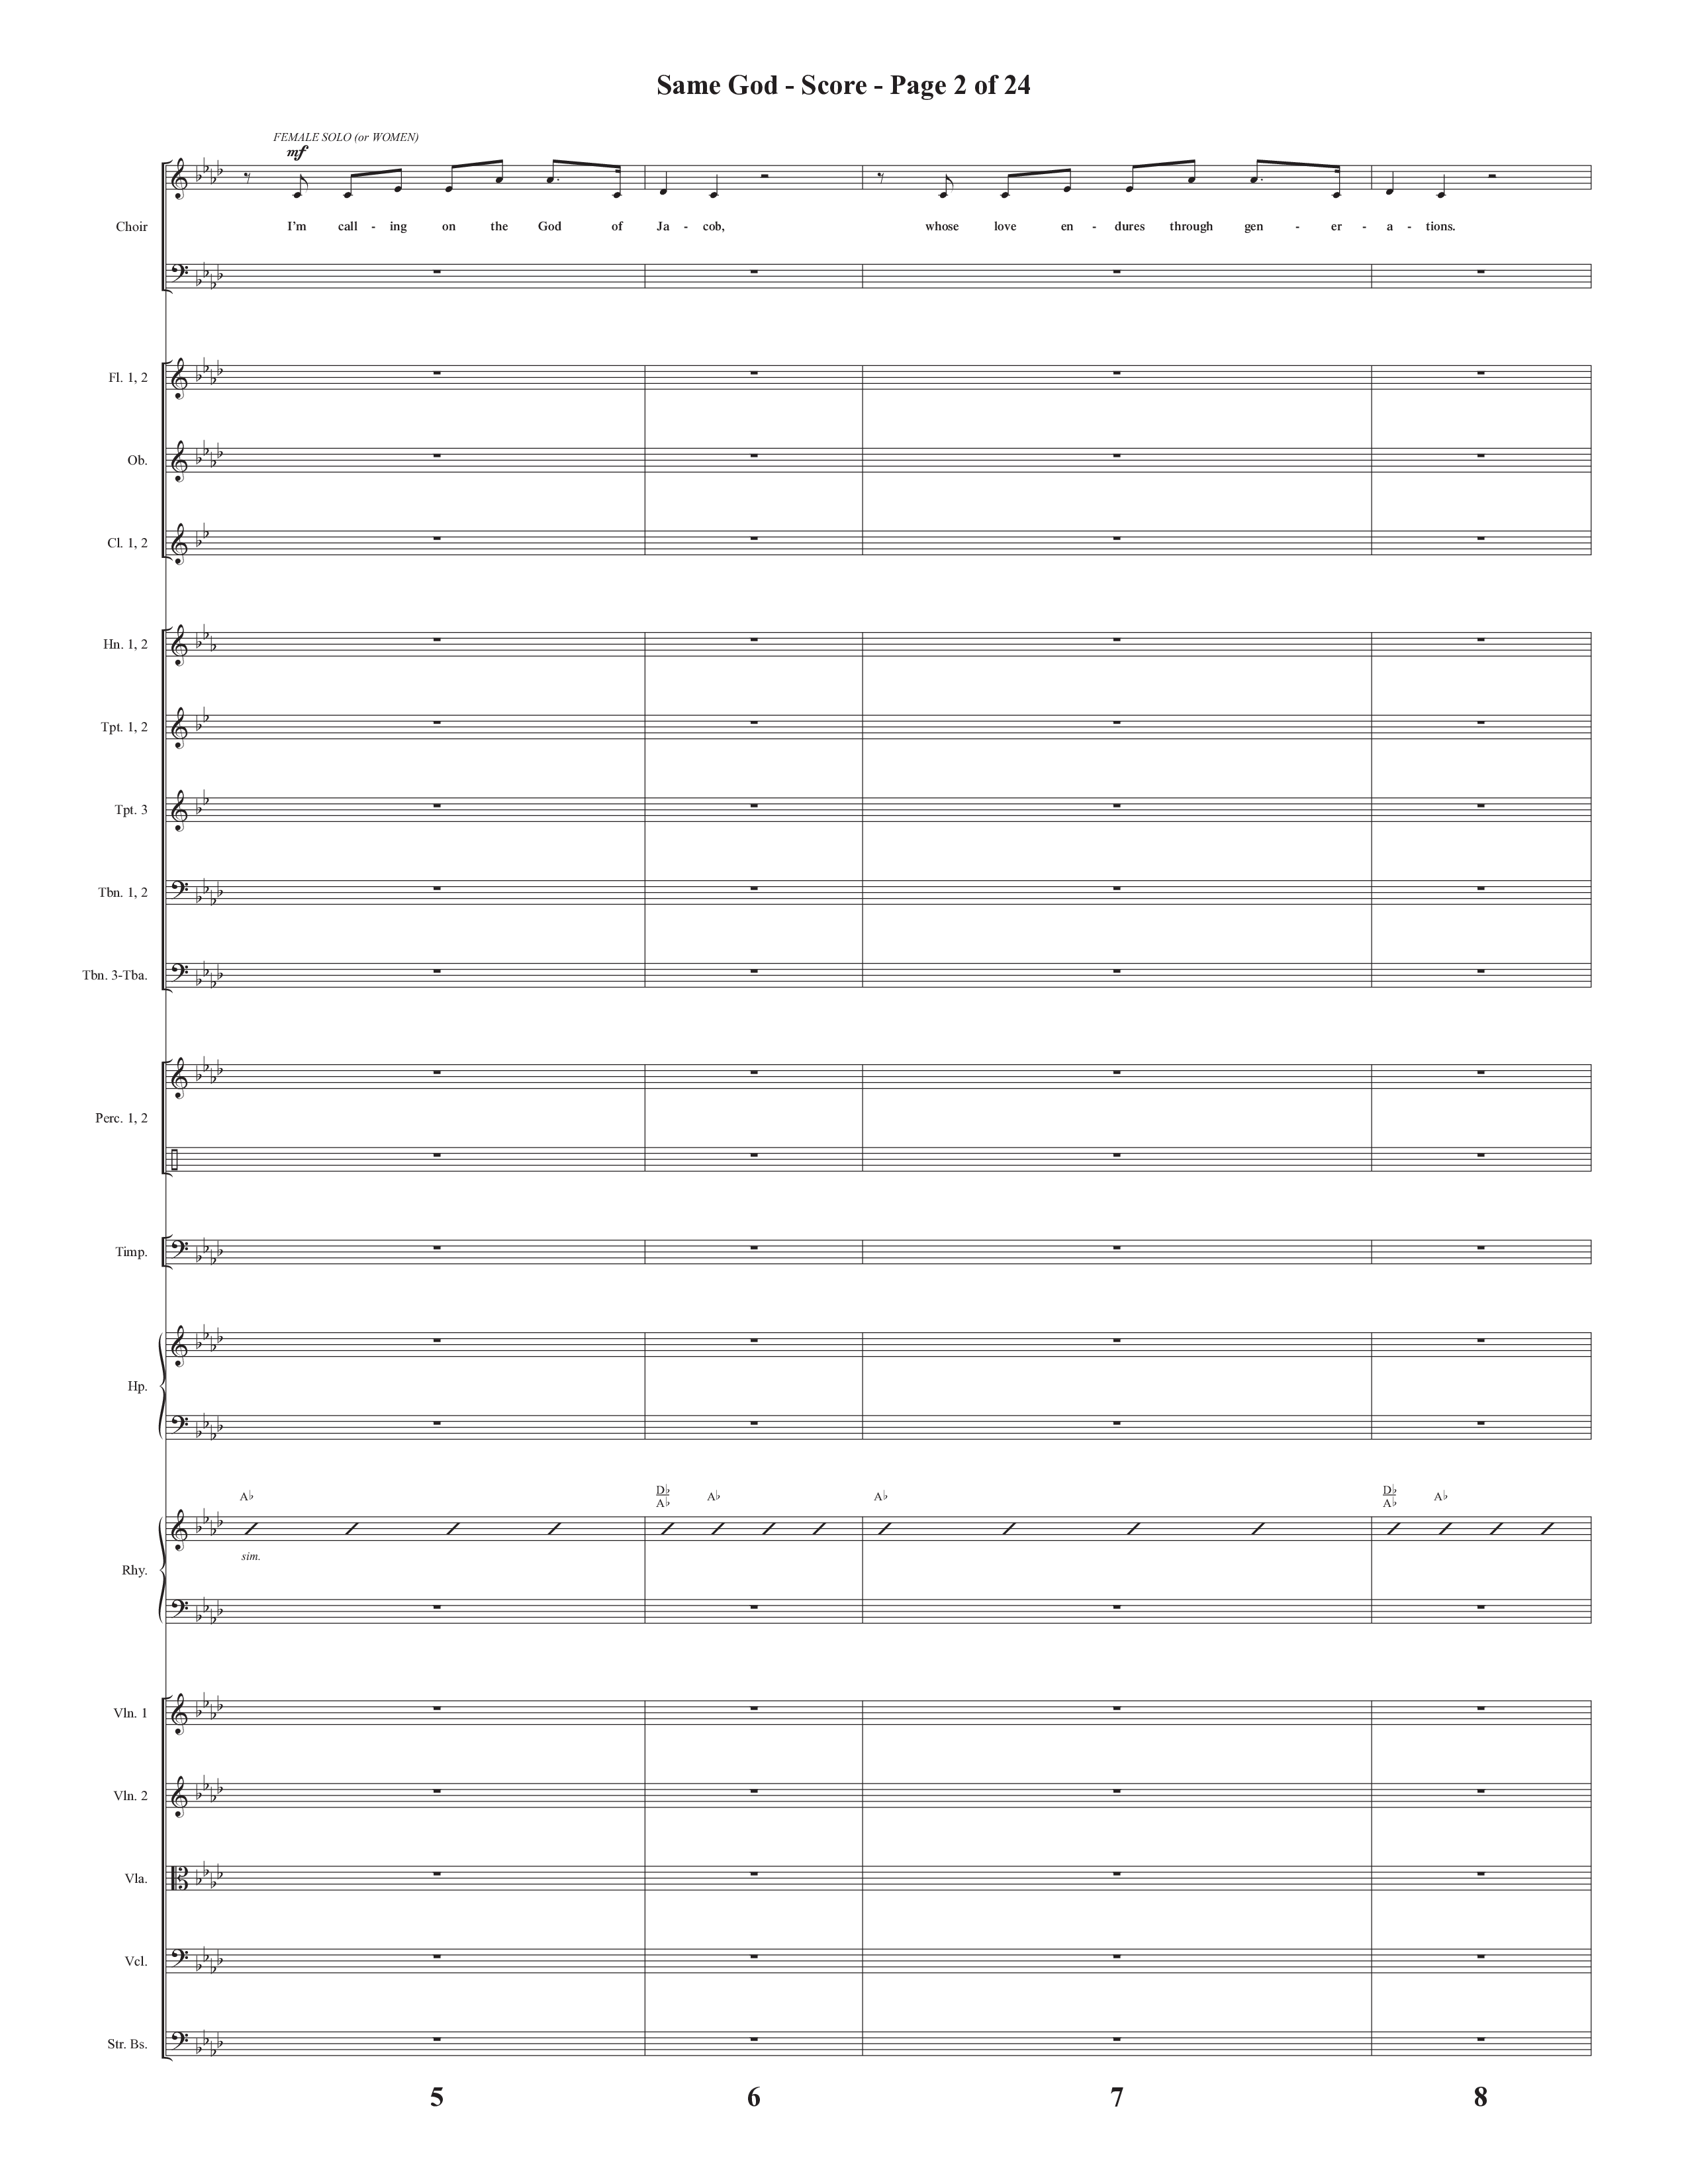 Same God (Choral Anthem SATB) Orchestration (Semsen Music / Arr. Phil Nitz)